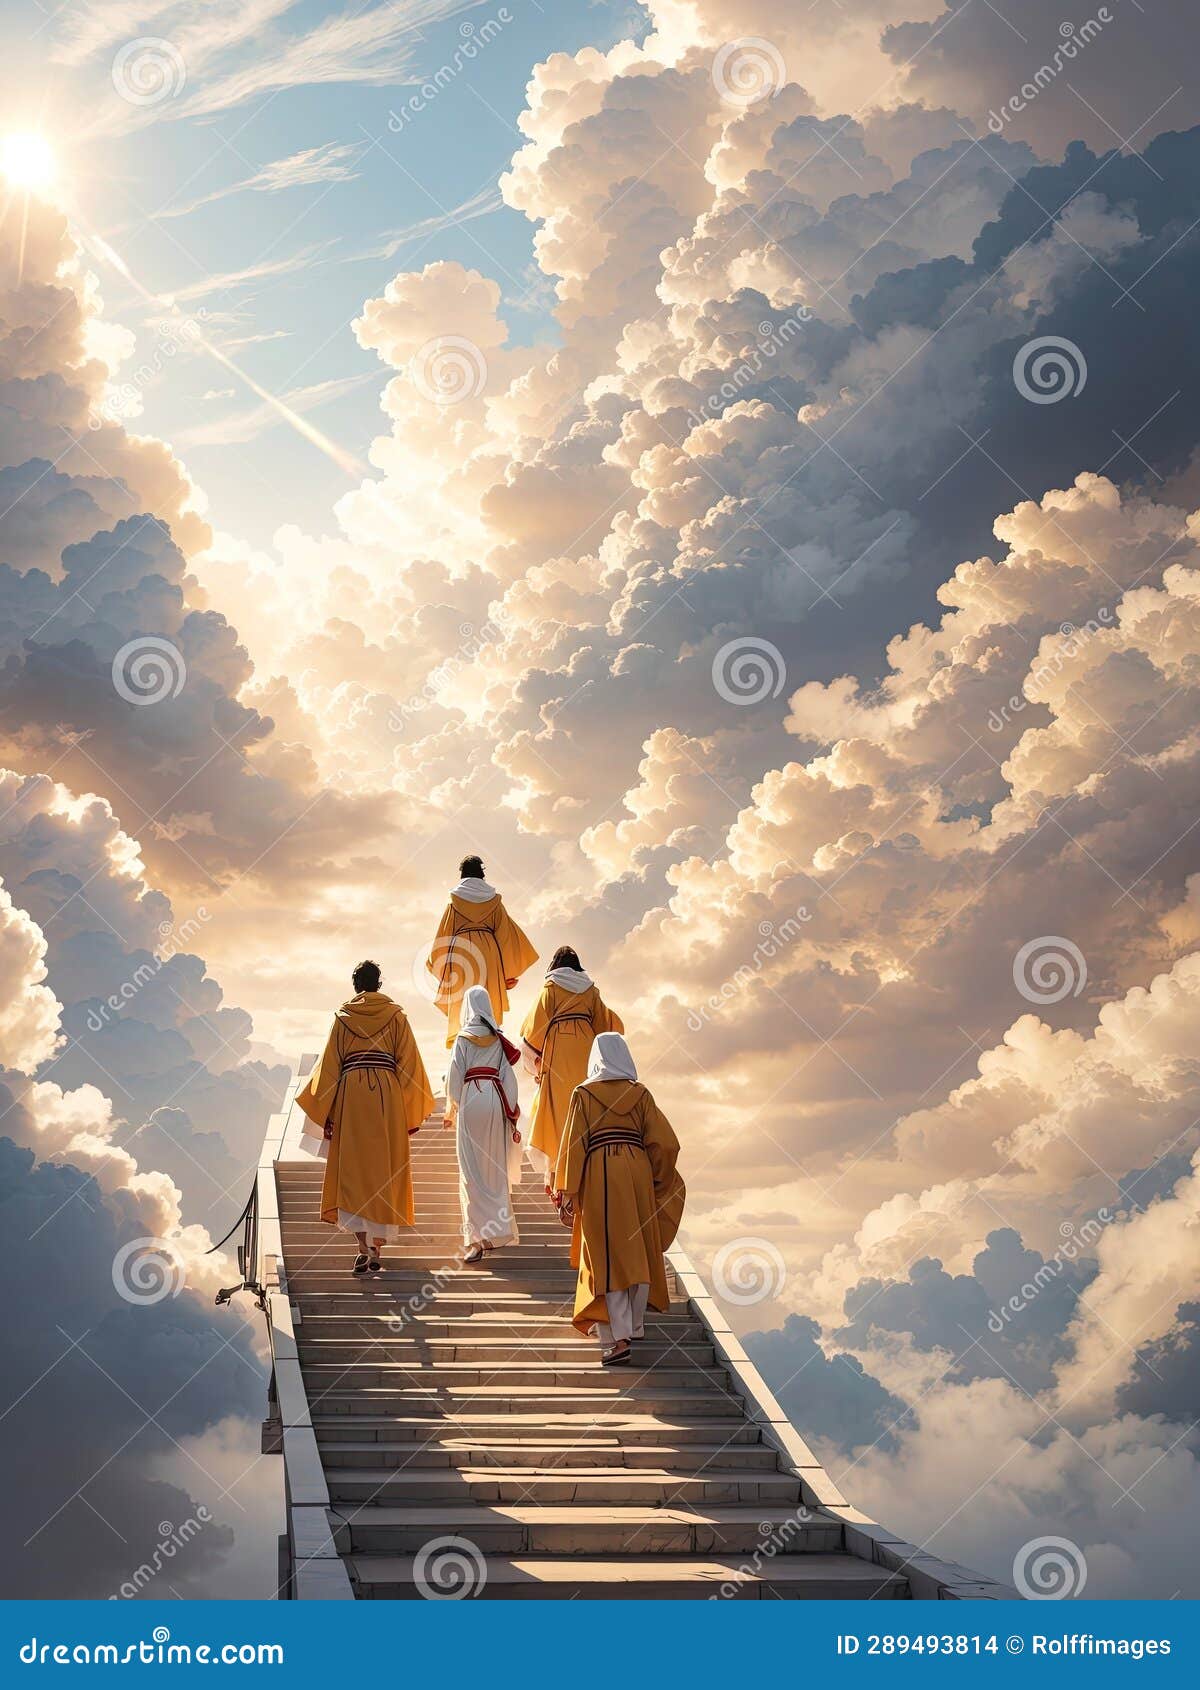 people dressed in robes walking up a stairway